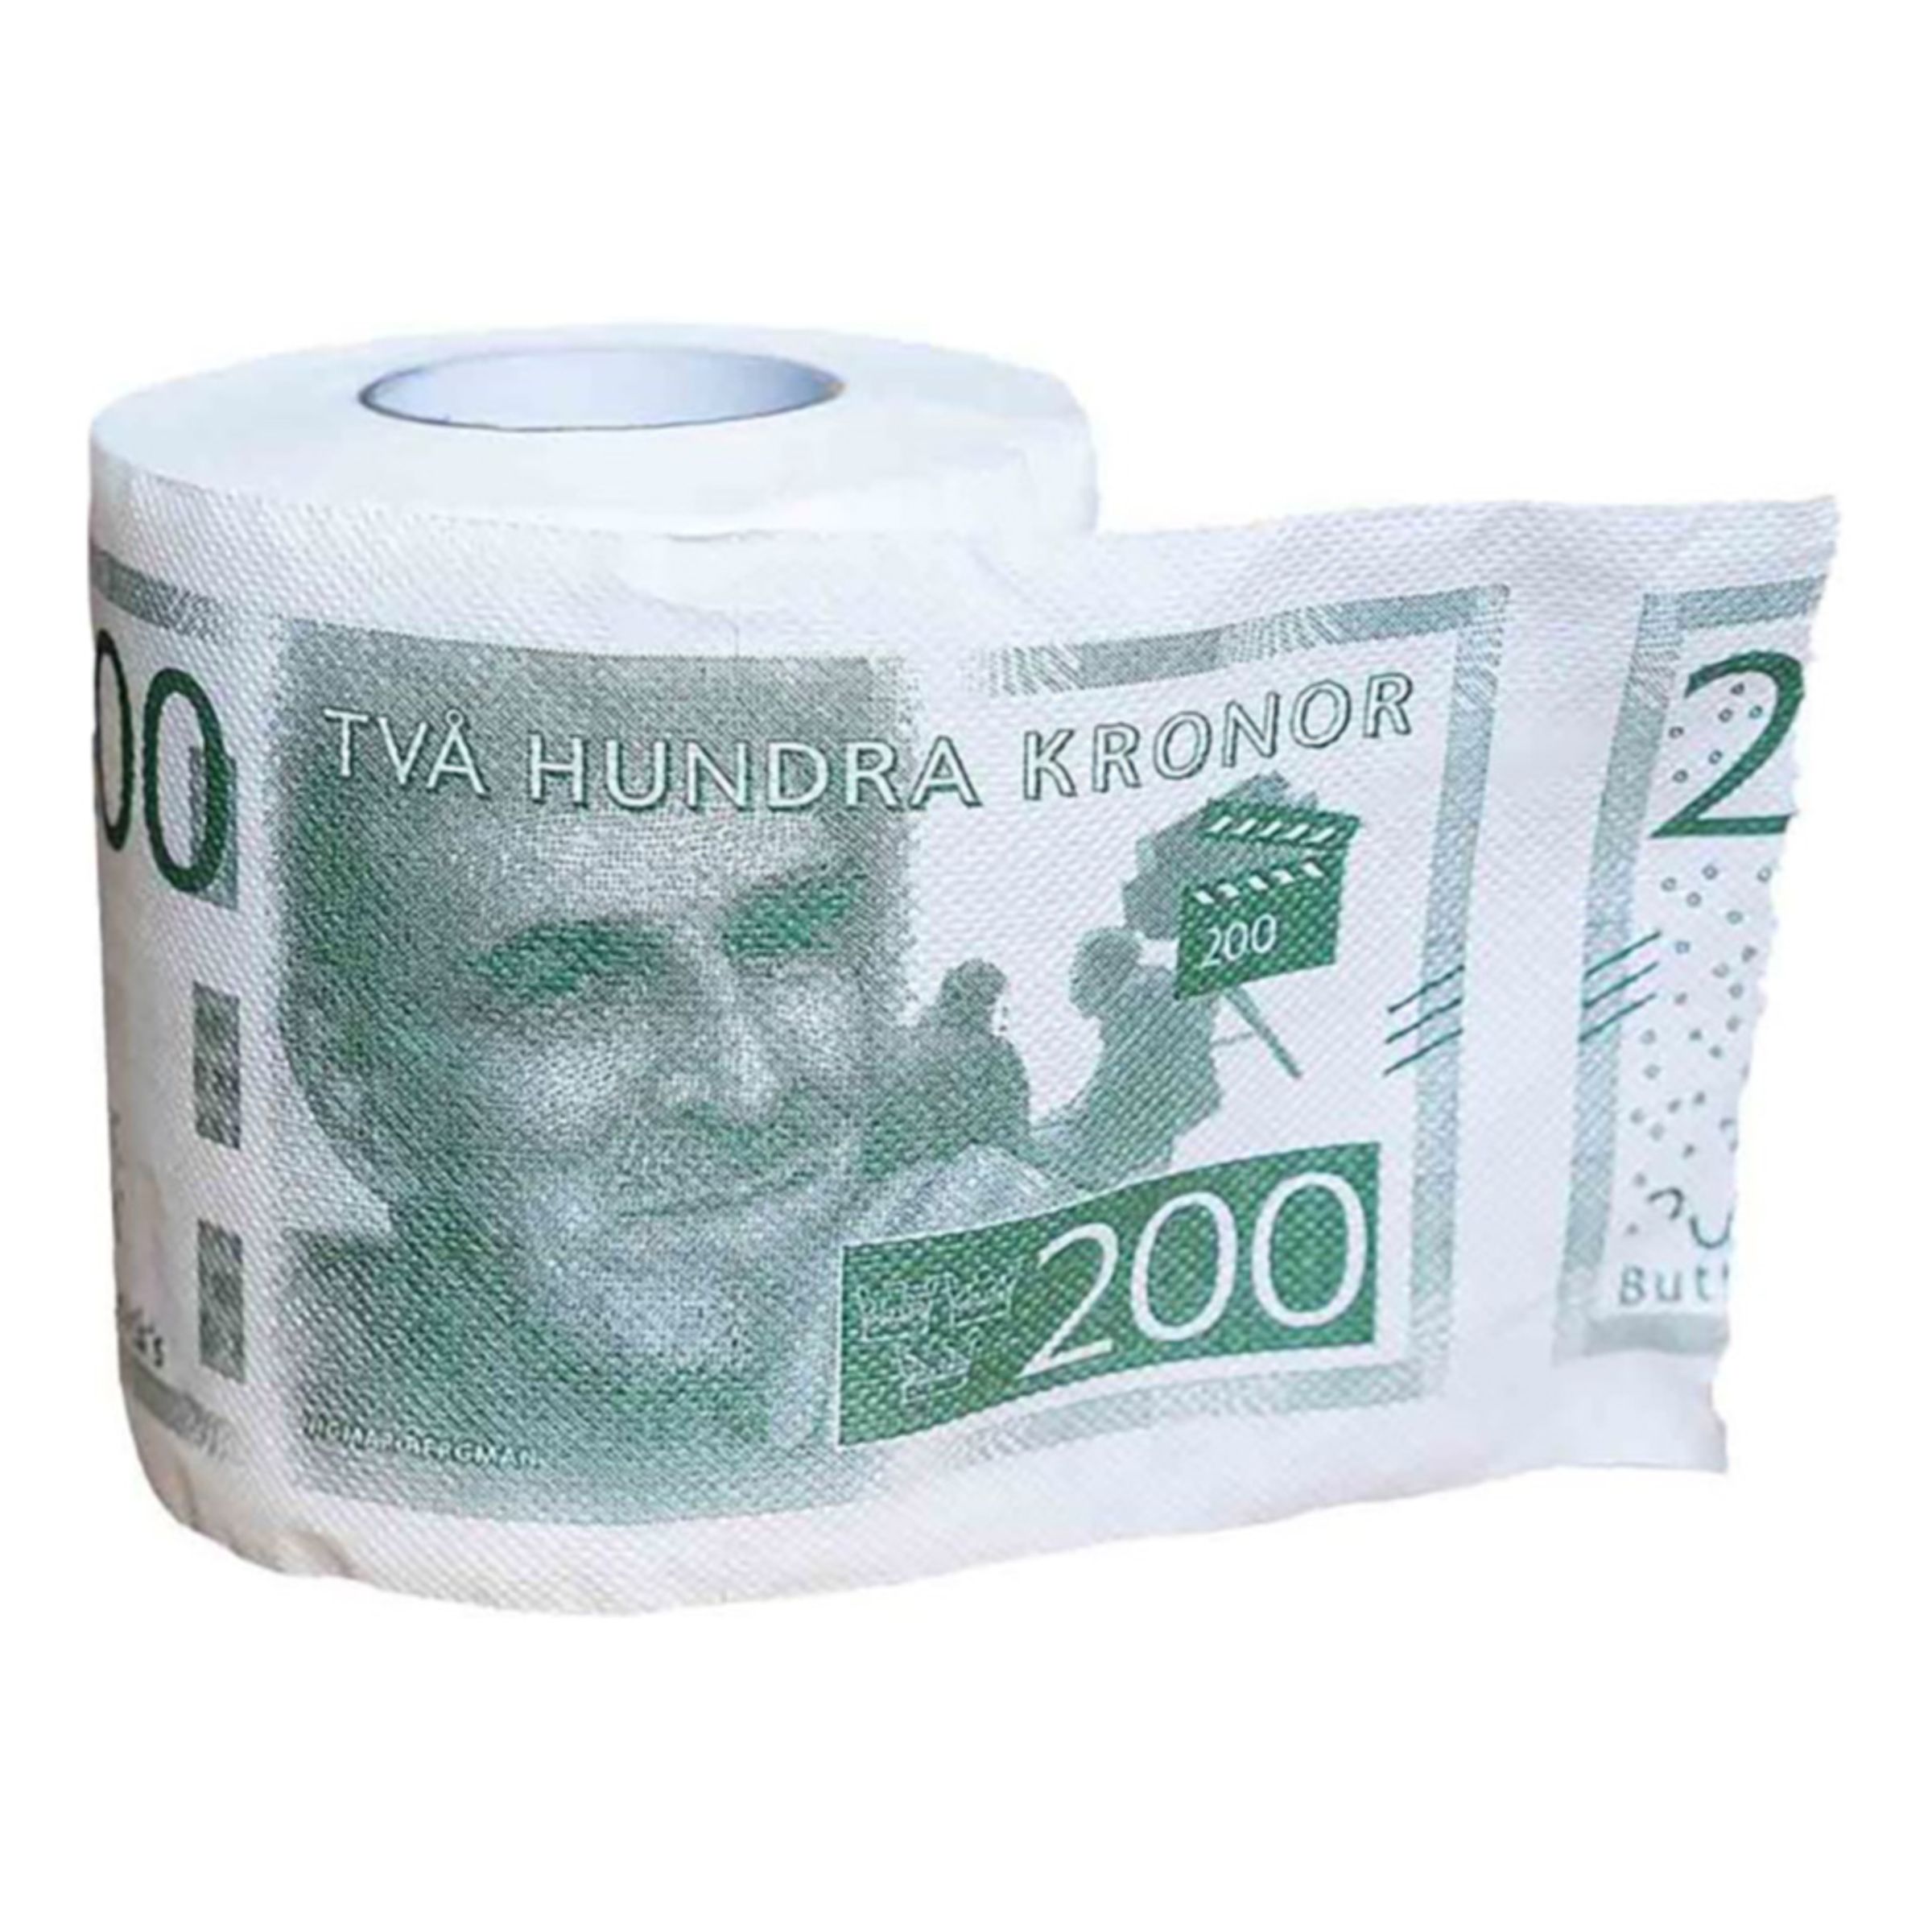 Toiletpapir 200-sedler (Svenske)